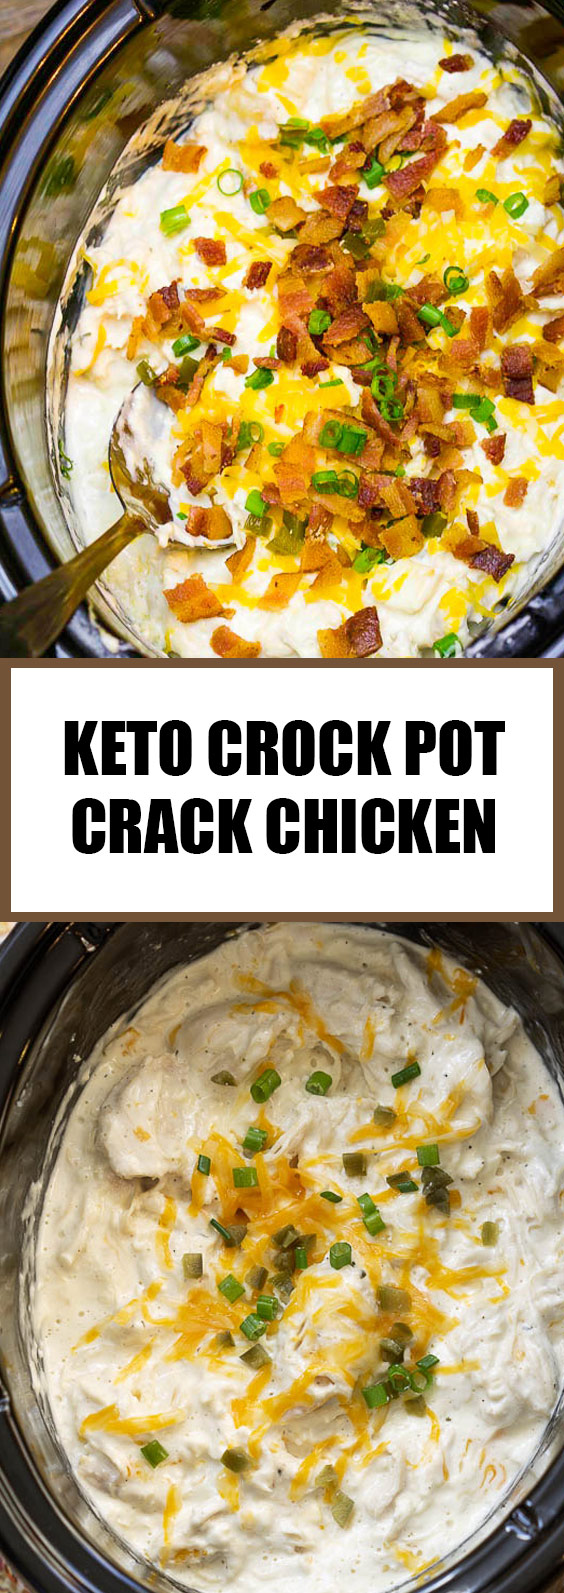 crockpot keto chicken recipes - setkab.com